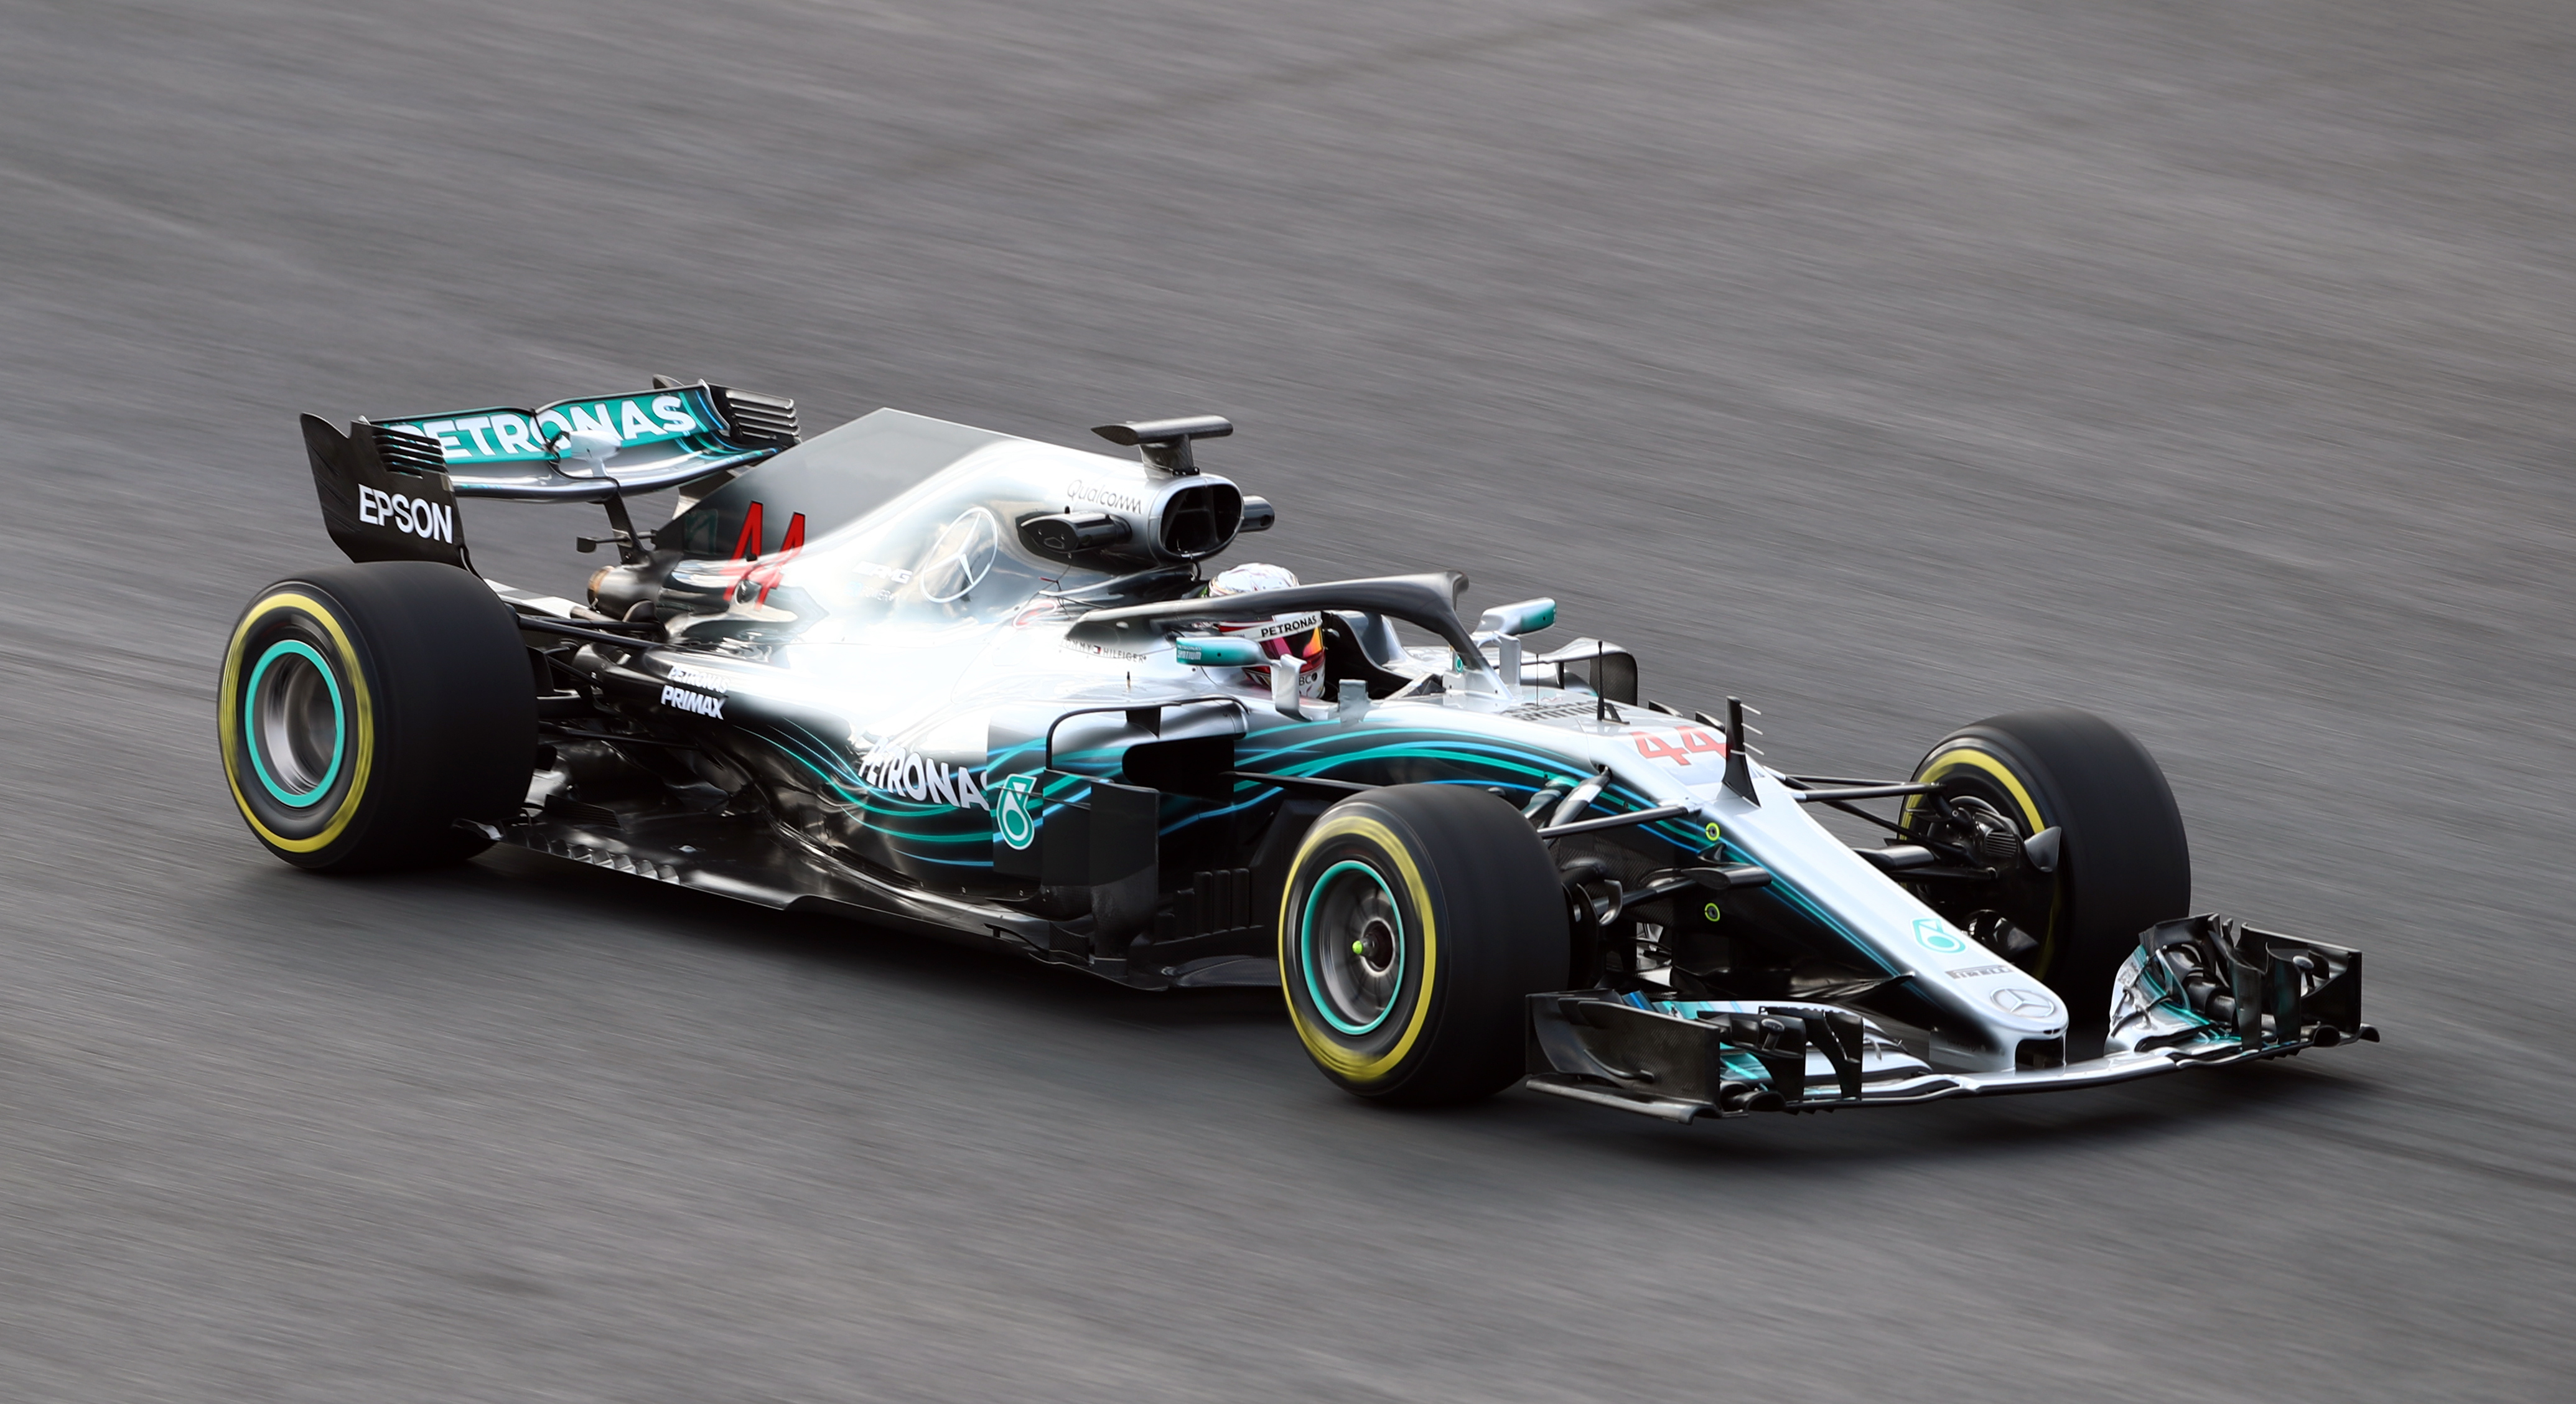 Lewis Hamilton in a Mercedes